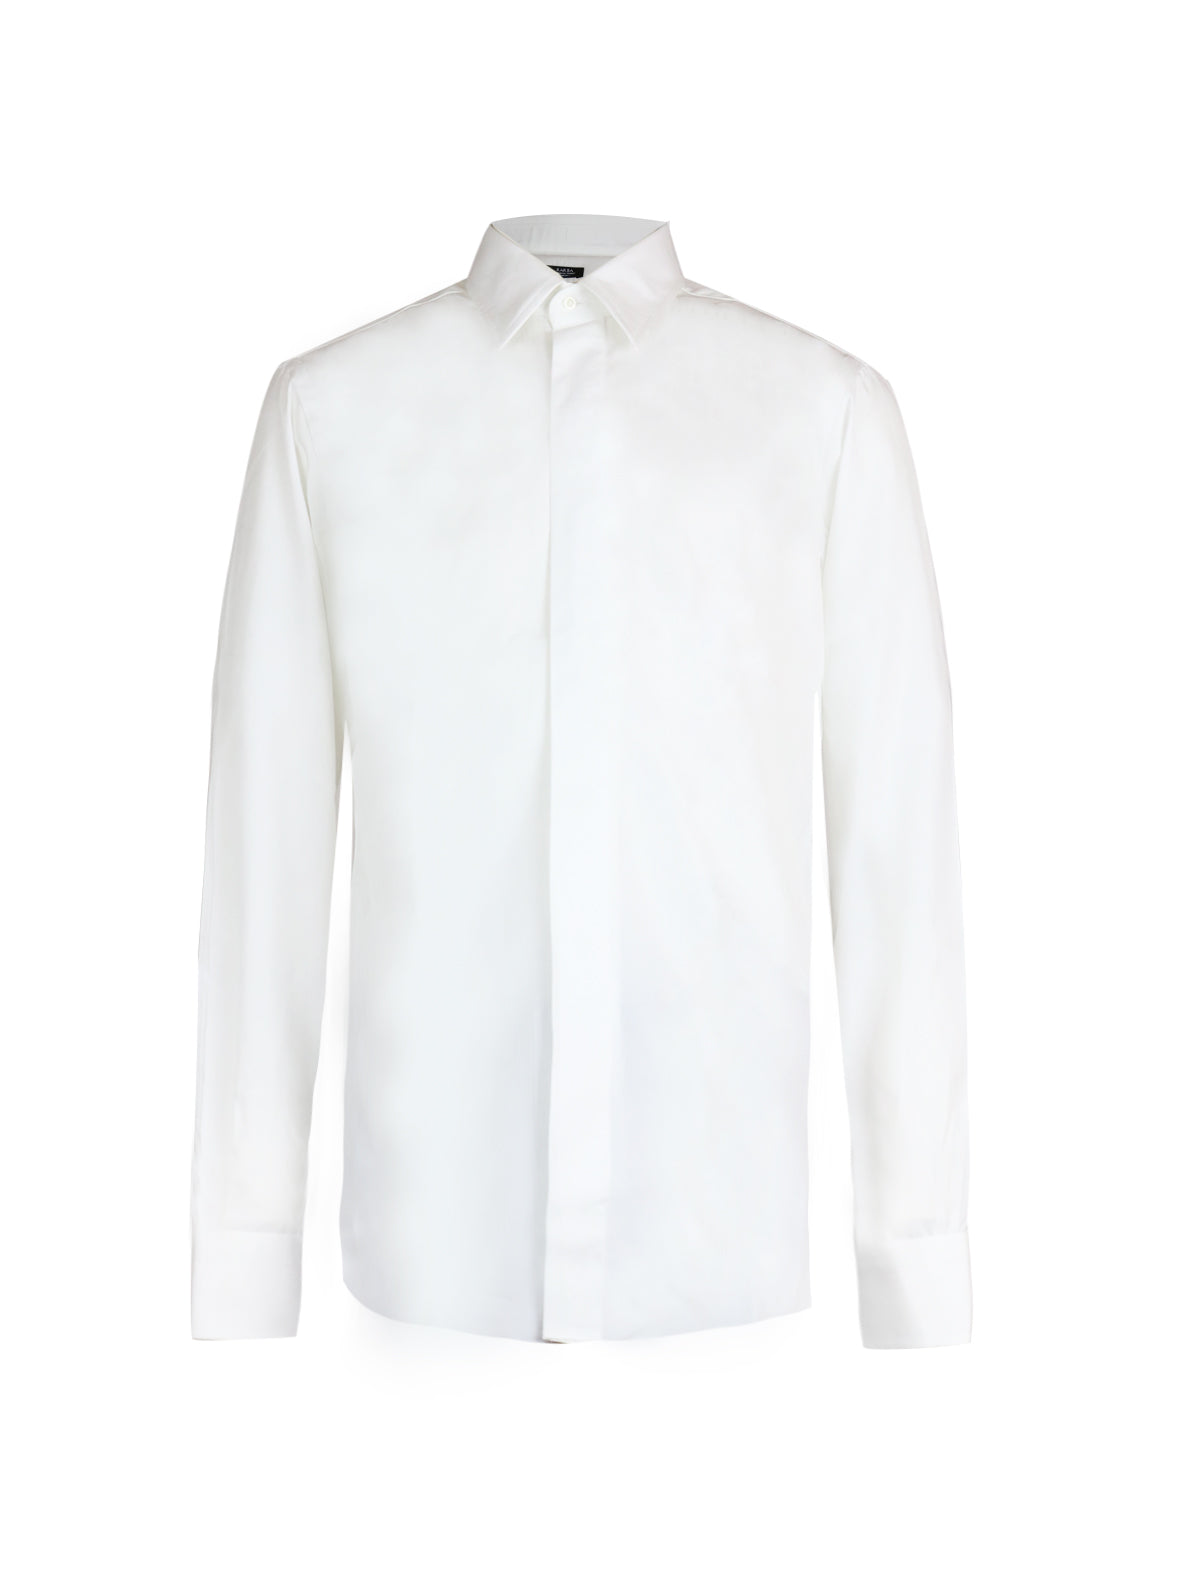 Barba Napoli Crisp Cotton Shirt in White